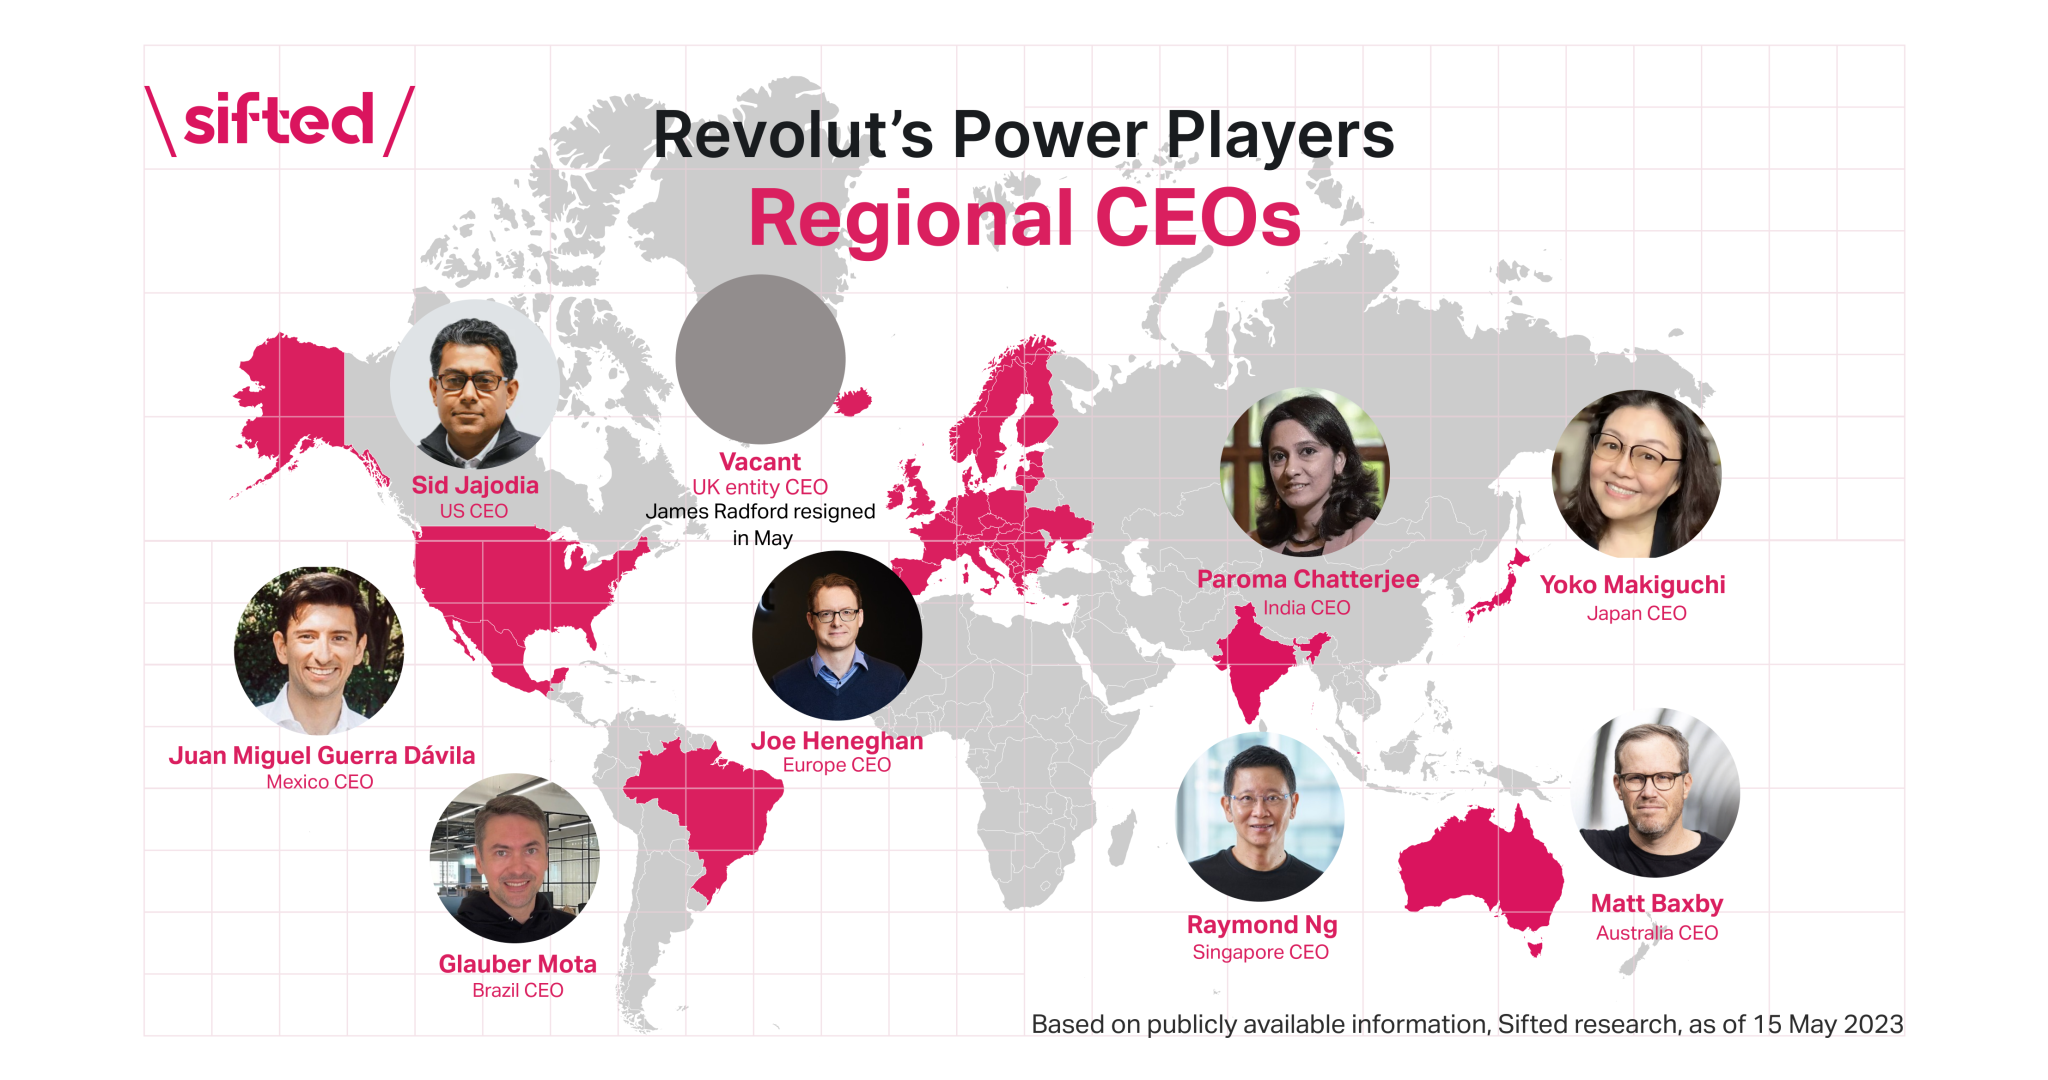 A world map diagram showing Revolut's regional CEOs